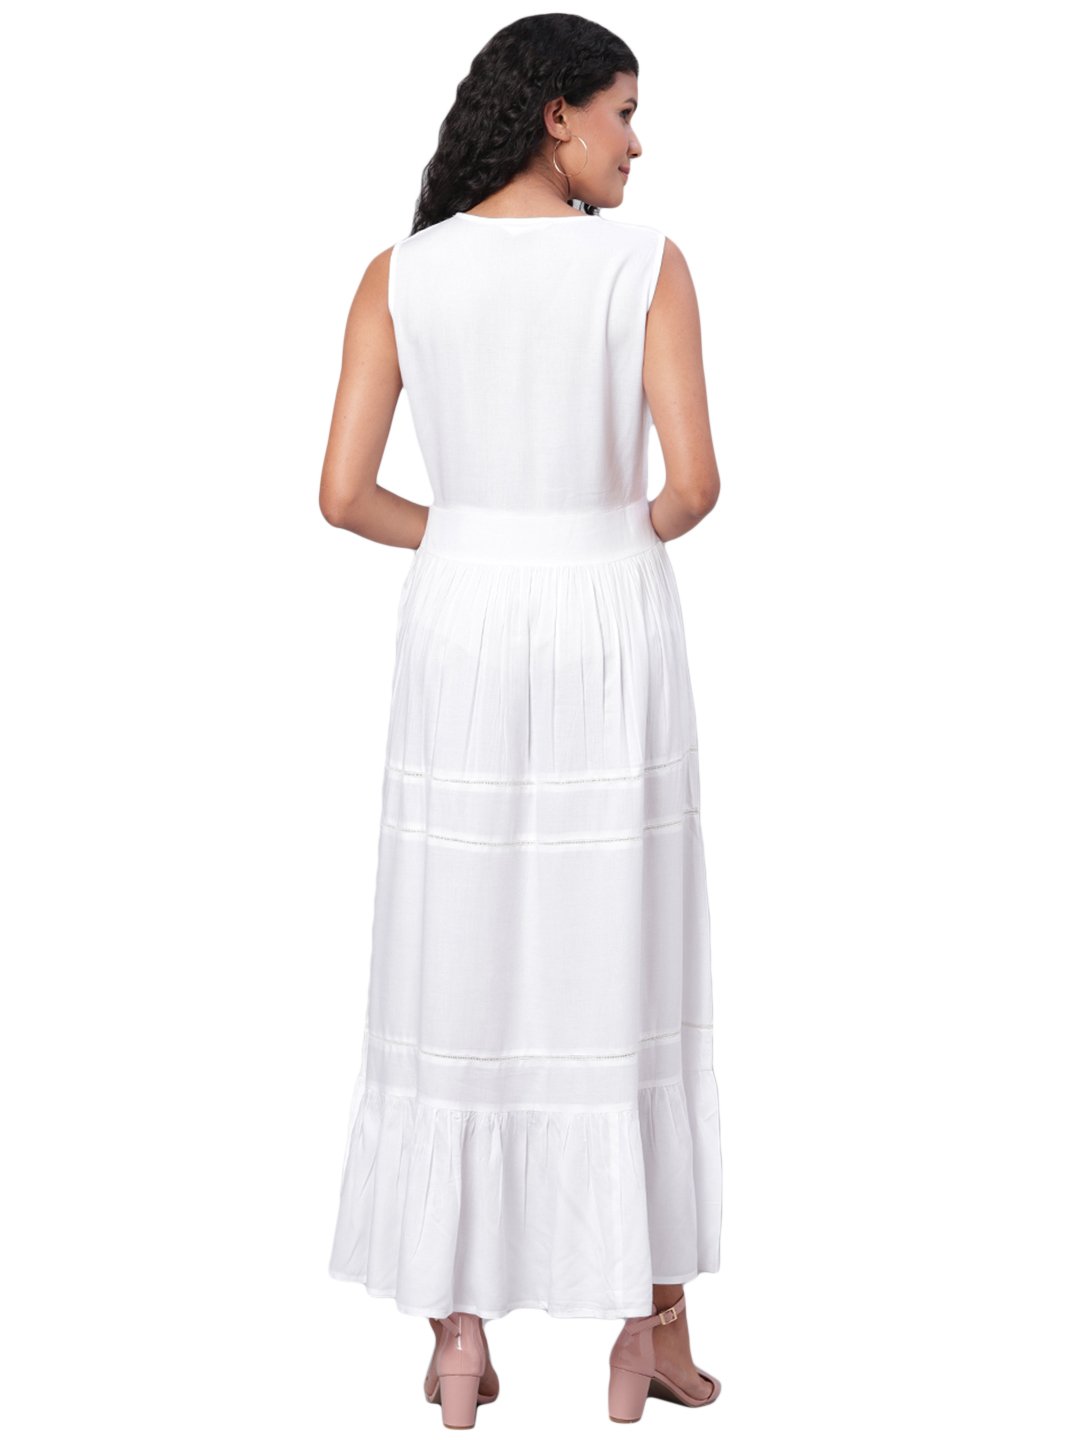 Women's White Solid Sleeveless Cotton V Neck Casual Dress - Myshka